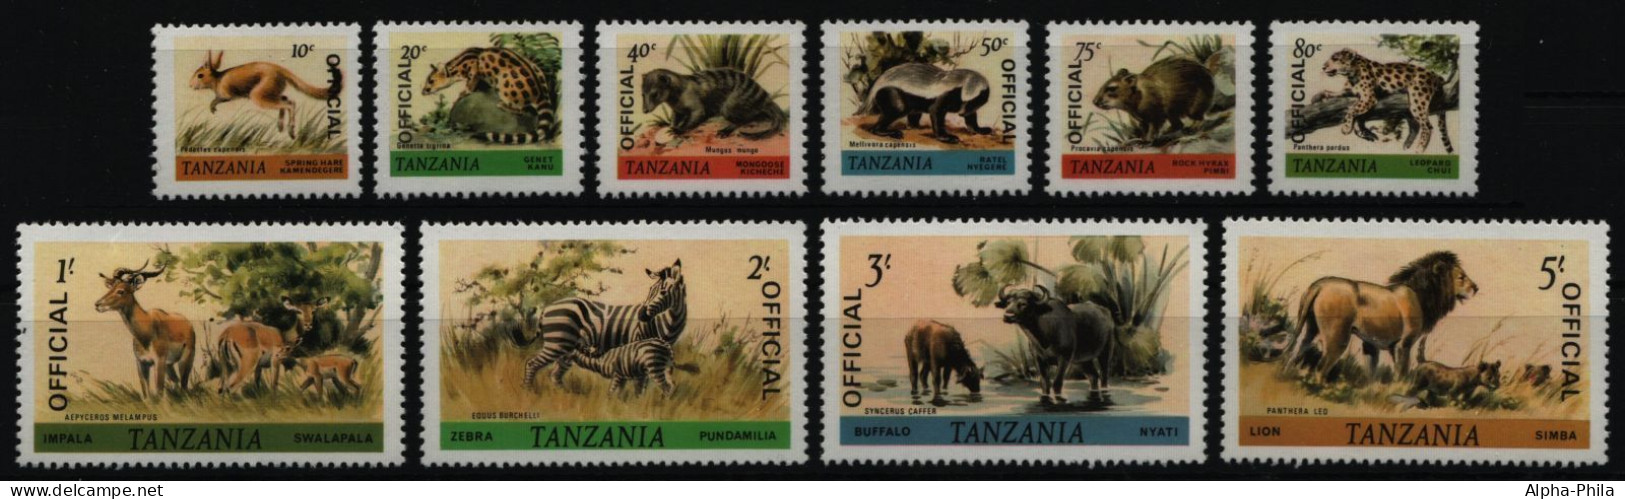 Tansania 1980 - Dienst - Mi-Nr. 28-37 ** - MNH - Wildtiere / Wild Animals - Tansania (1964-...)